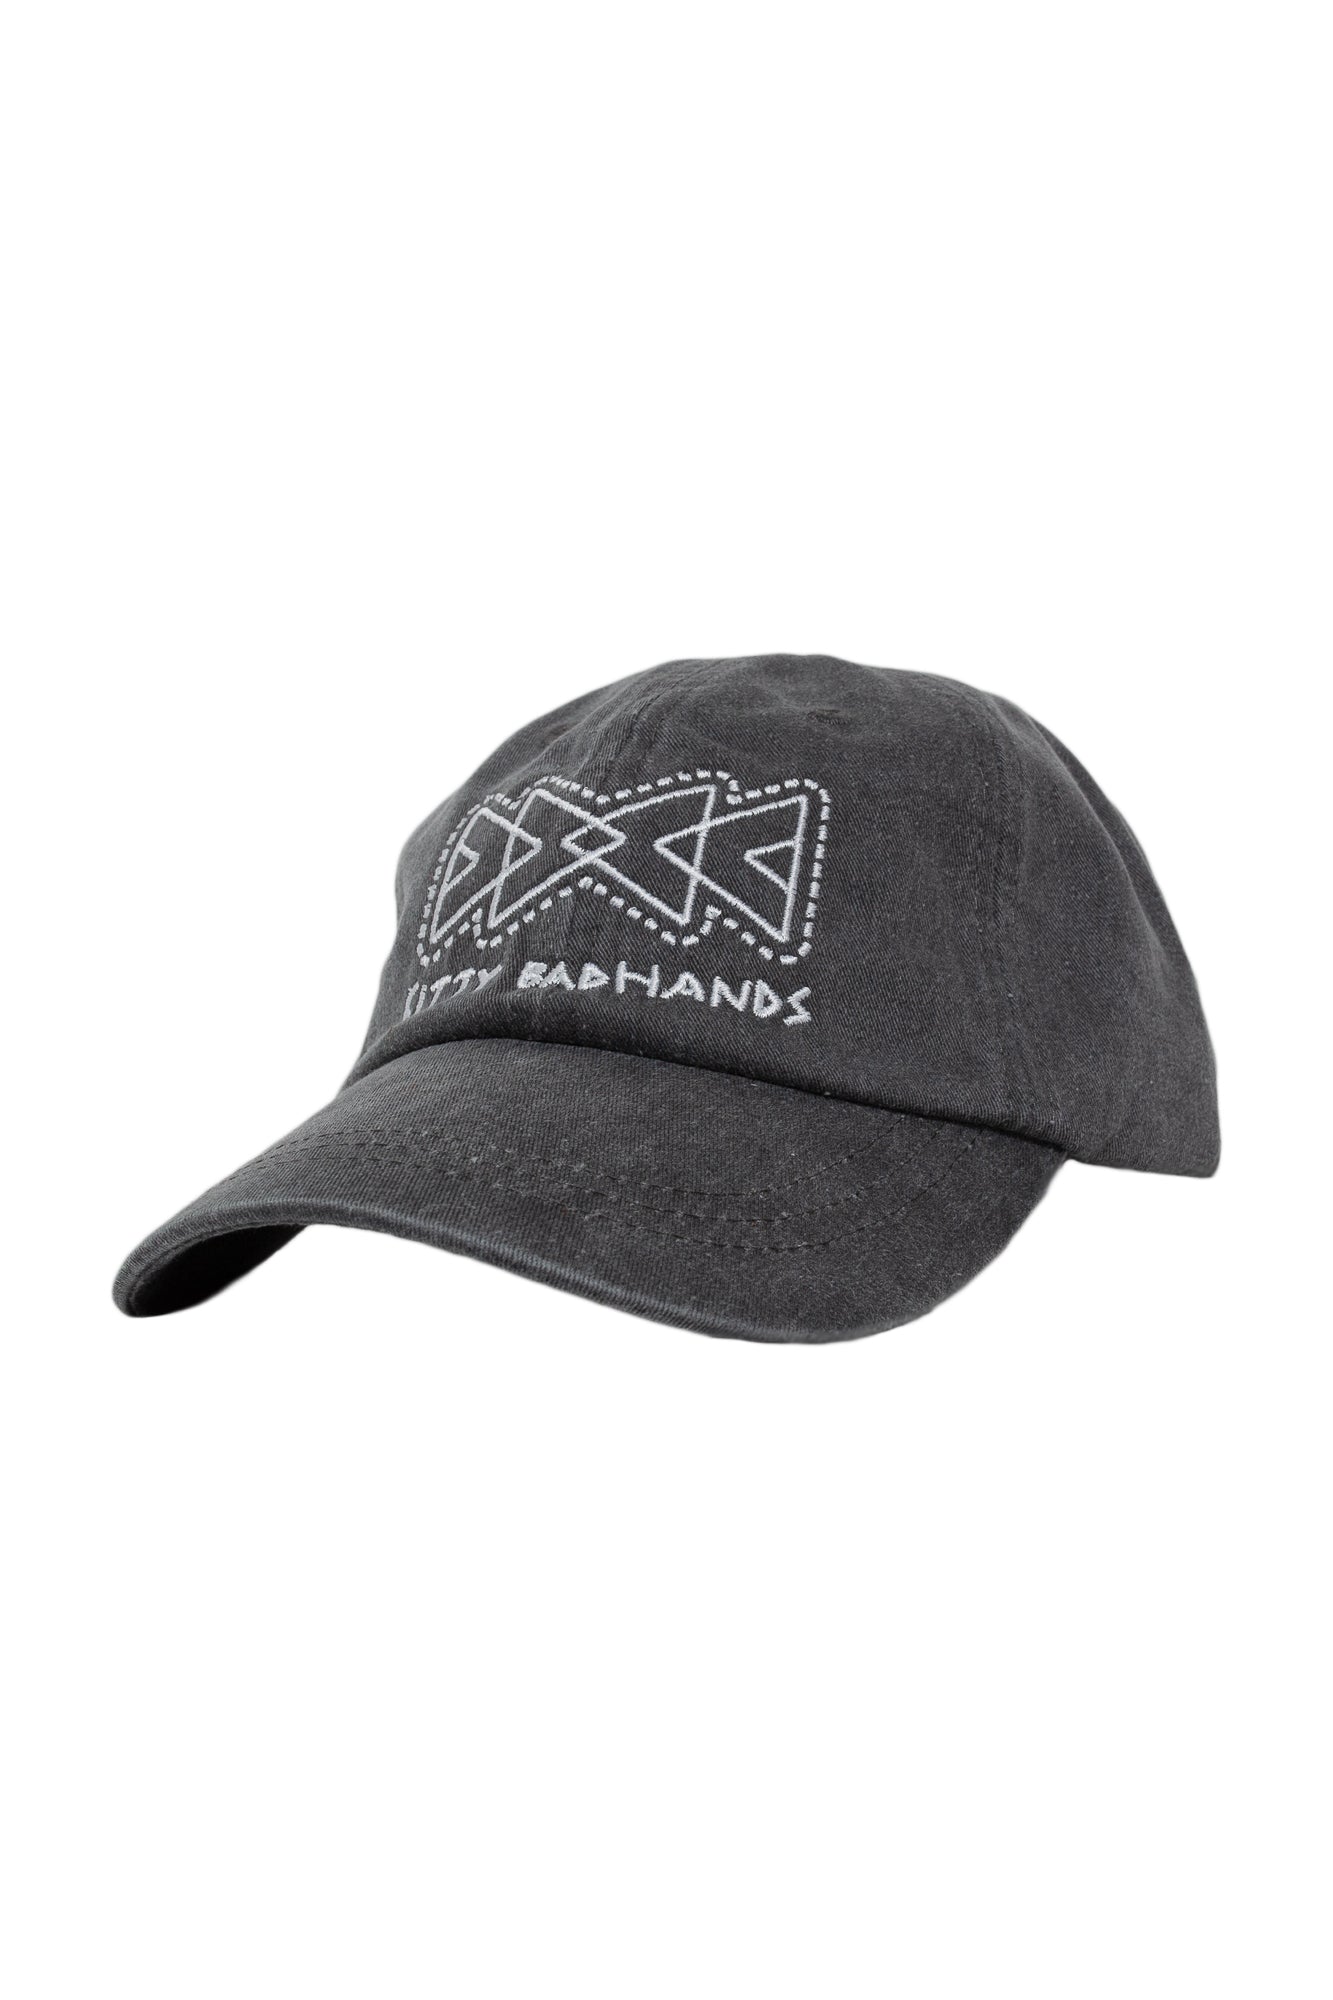 
                  
                    Classic KBH Logo Cap - Kitty Badhands - Hats - Accessories - baseball hat - hat
                  
                